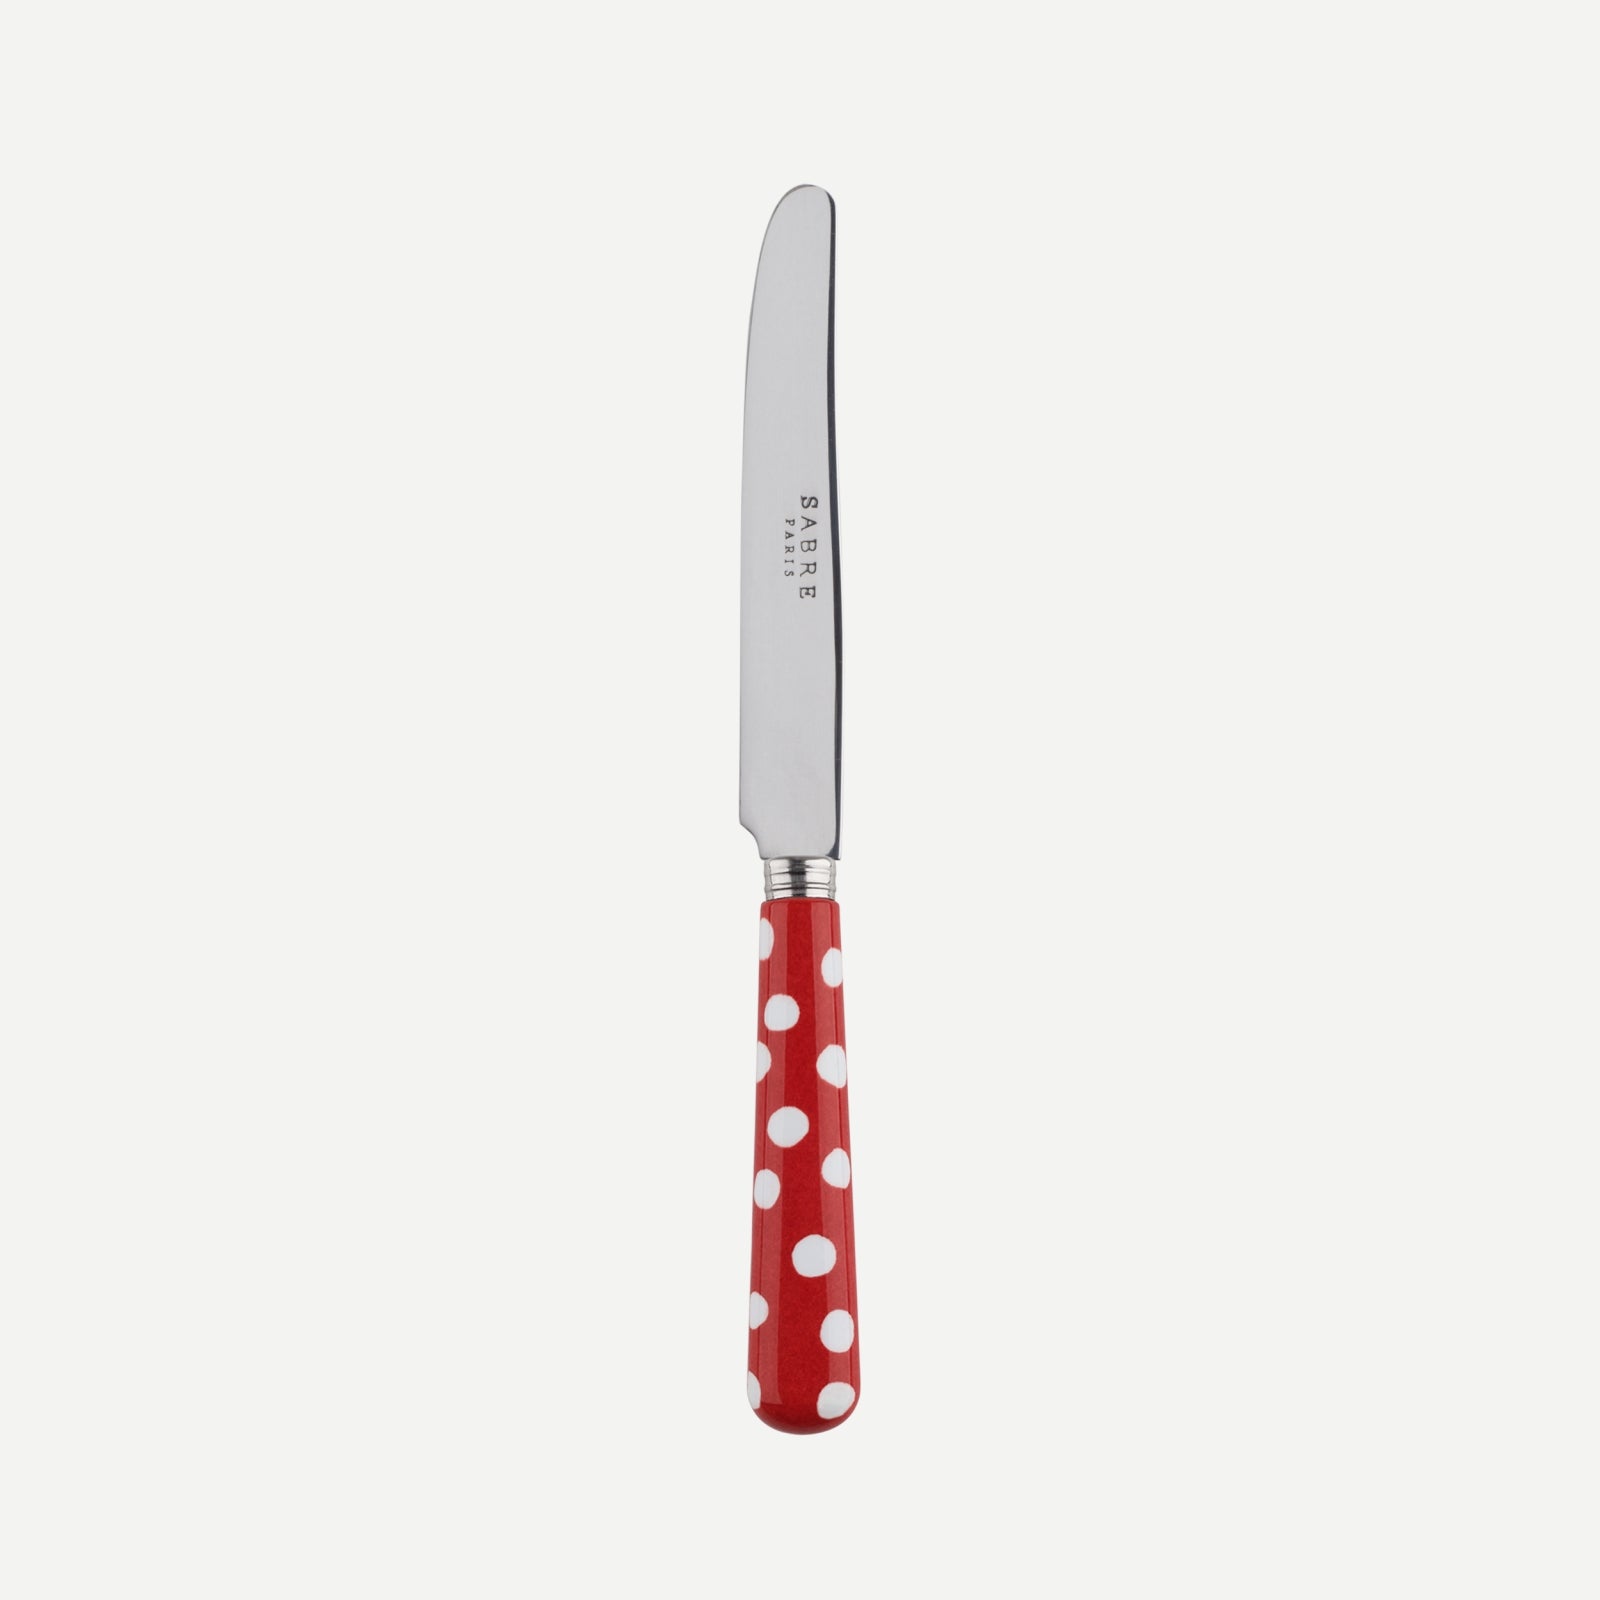 Breakfast knife - White Dots. - Red